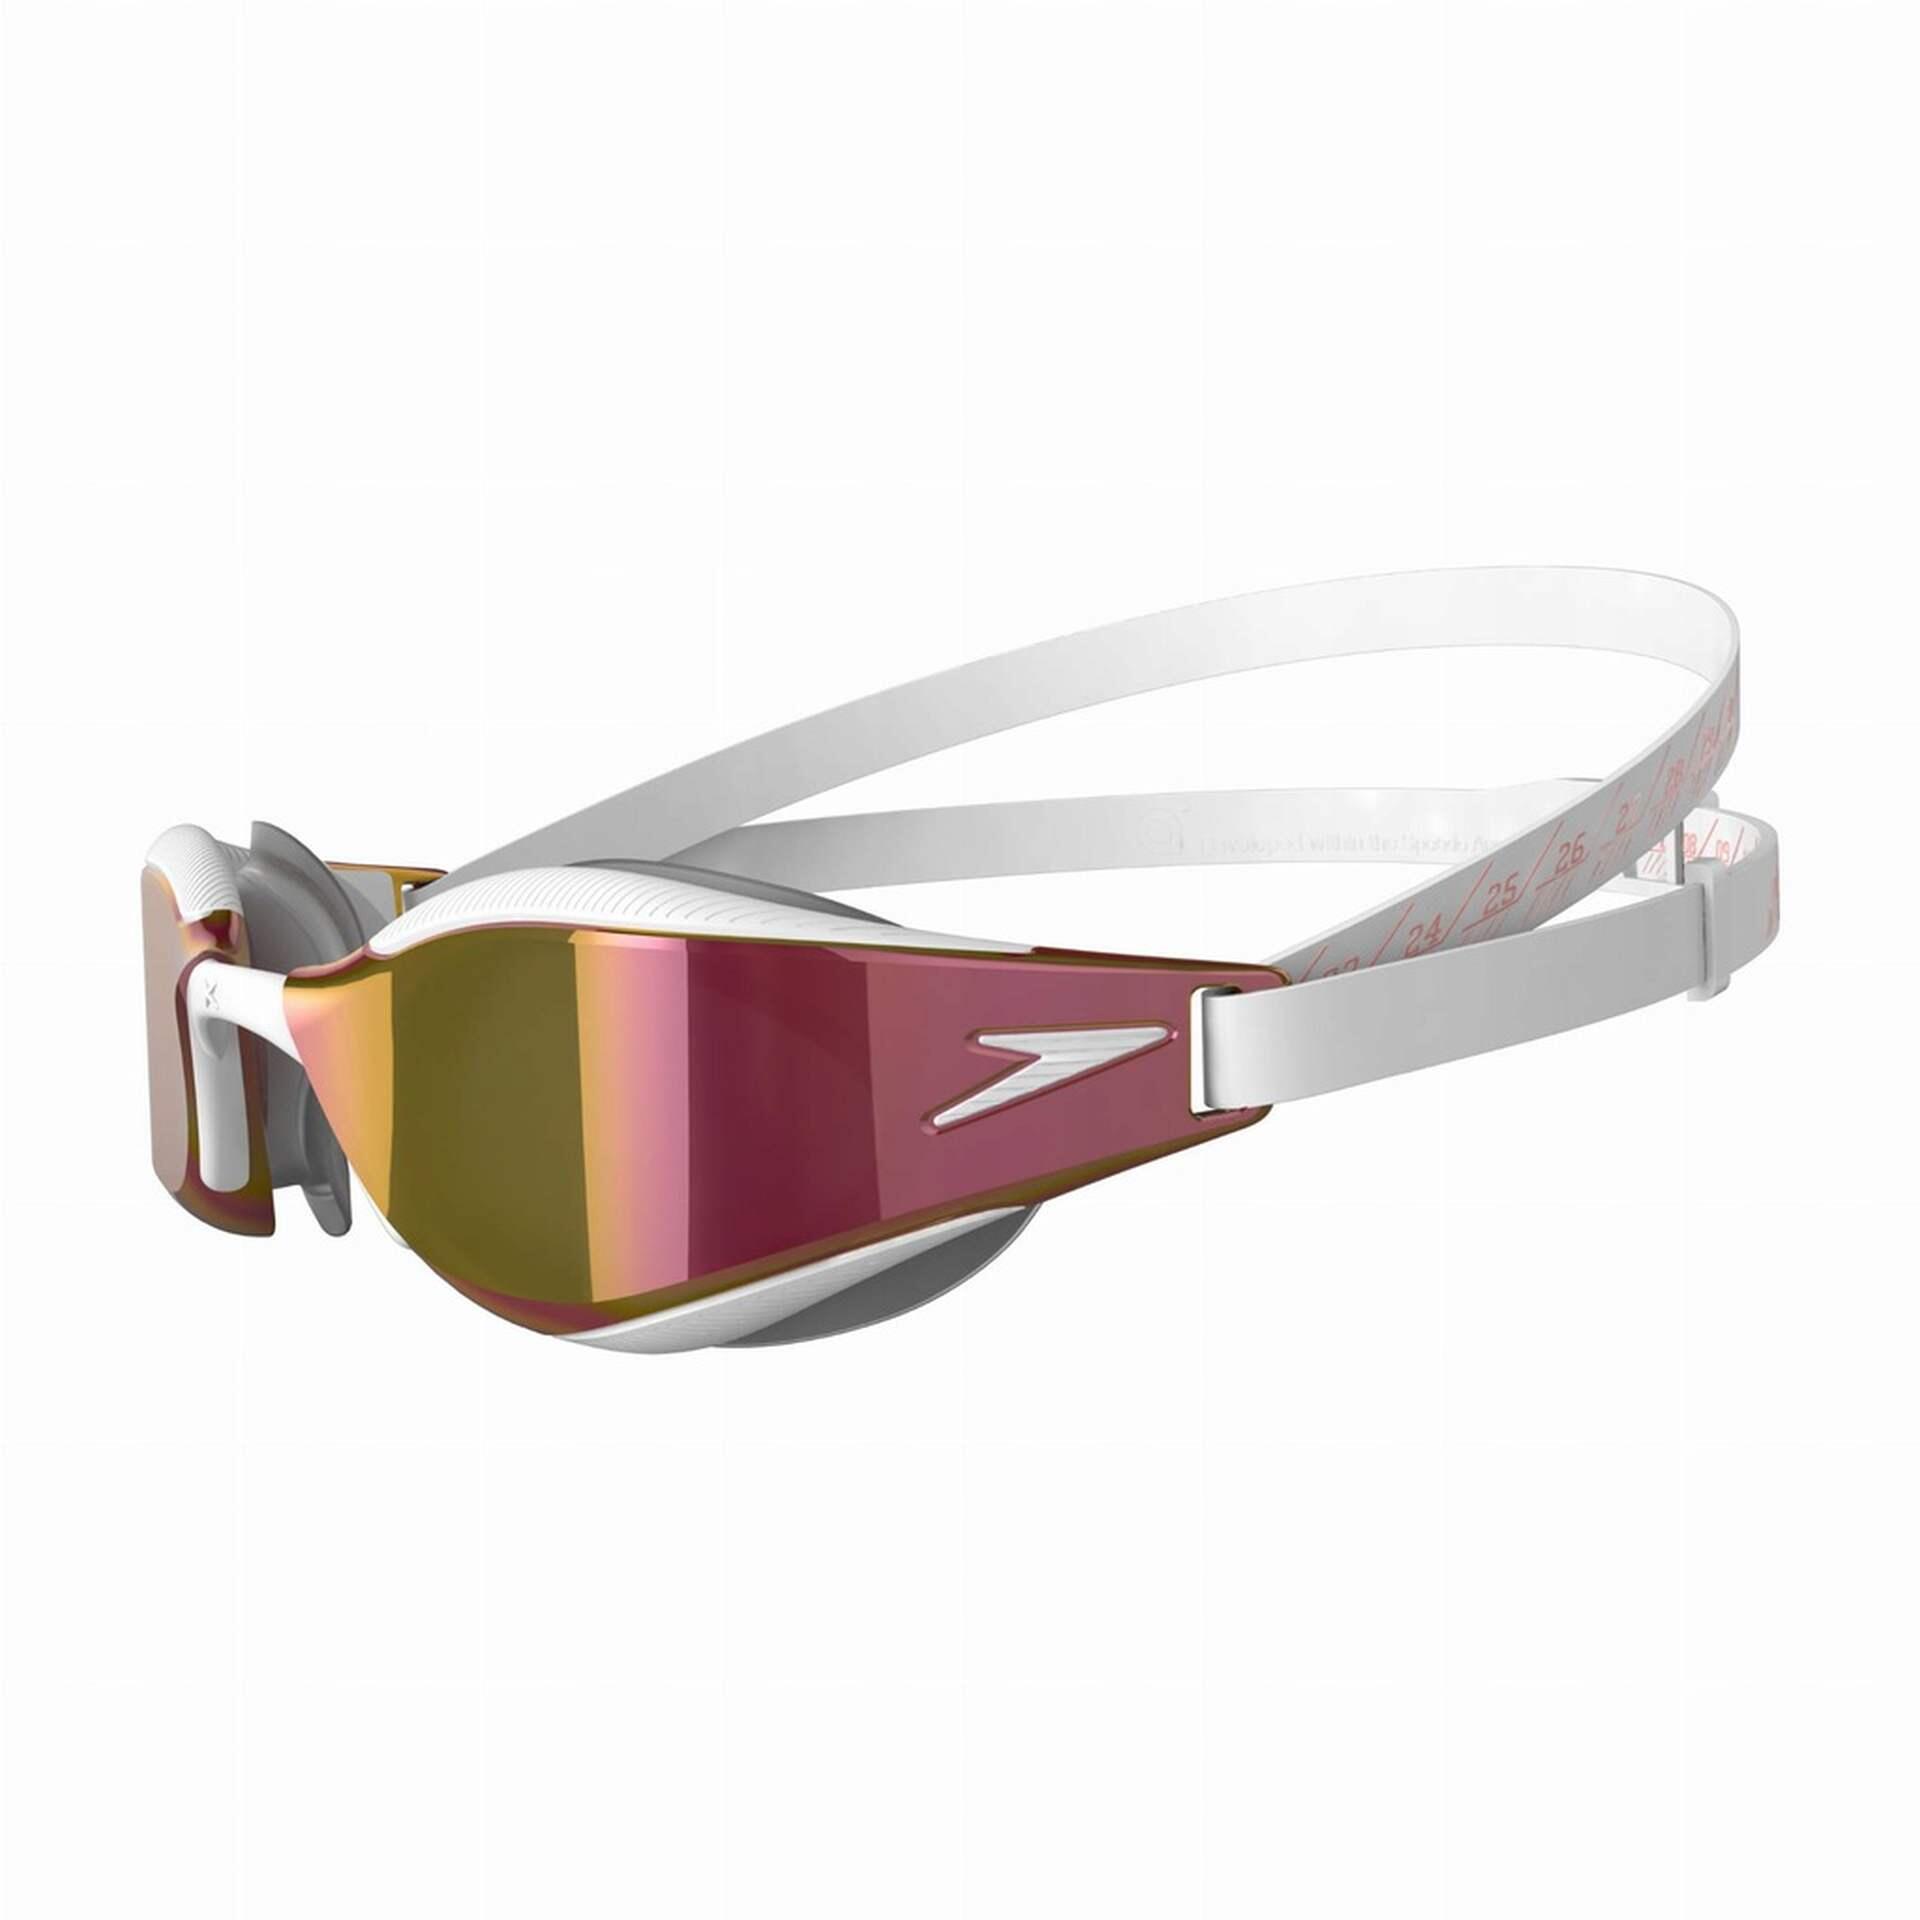 Speedo Fastskin Hyper Elite Mirror Goggles - White / Oxid Grey / Rose Gold 1/5